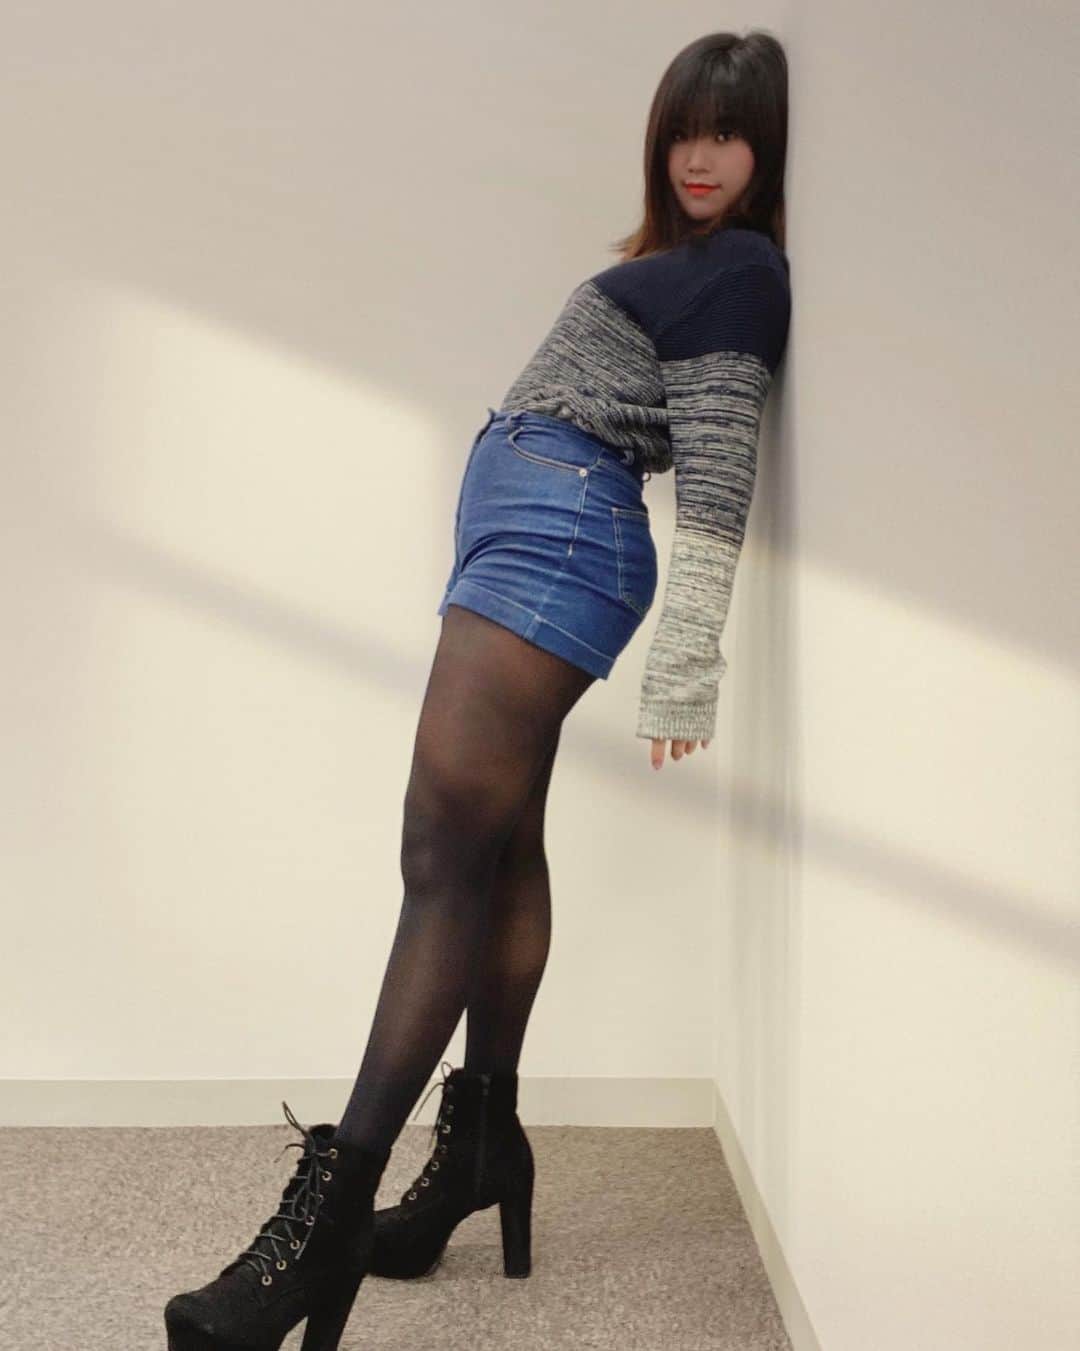 SIRIUSのインスタグラム：「第一張好像木偶娃娃🤣 恢復了長腿穿搭 但是上班果然還是不要太誇張吧😂 毛衣+短褲應該還好吧？ 最近真的冷❄️ 大家都要注意保暖喔 . . #ootd #ootdfashion #ootd4nylonjp #workday #dailylook #style #sweater #winter #fashion #japanesefashion #asiangirl #cute #kawaii #legs #legday #girl #fitness #hips #fitnessmotivation #instagood #instagram #instalike  #今日のコーデ #セーター #ファッション #美脚 #スタイル  #黑絲 #長腿」